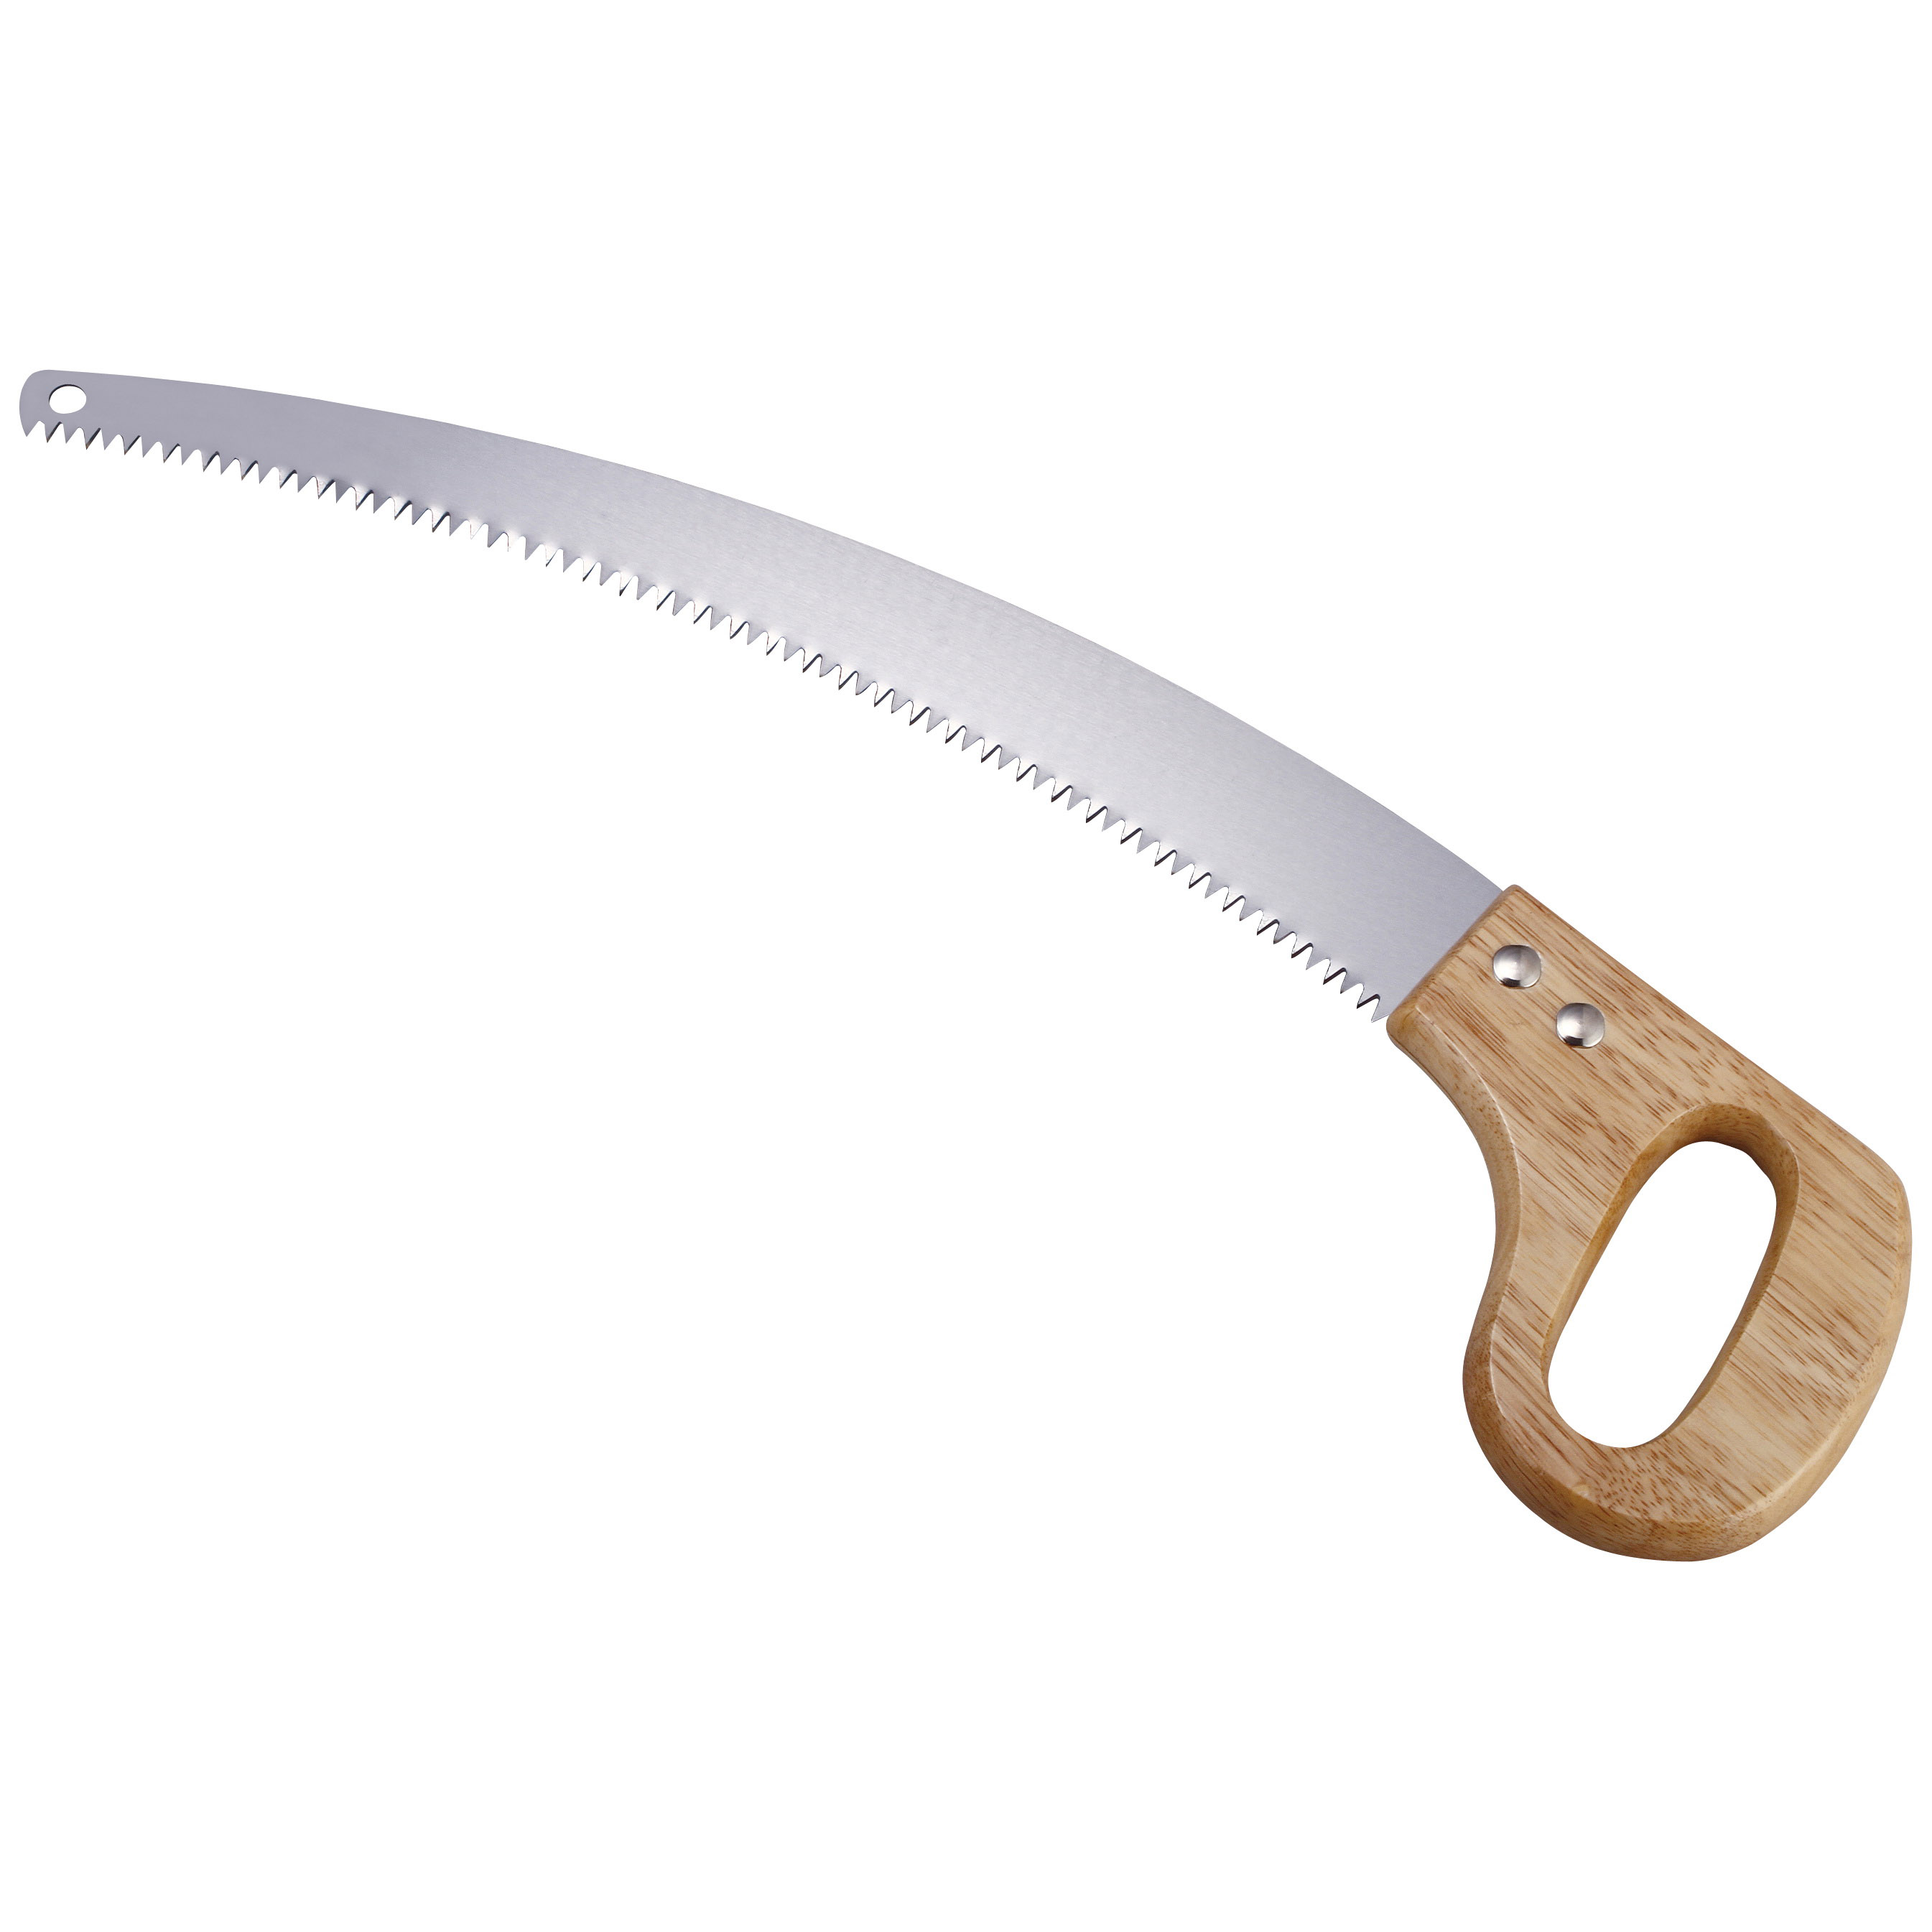 C-835-15 Pruning Saw, Steel Blade, 5 TPI, Wood Handle, 20 in OAL